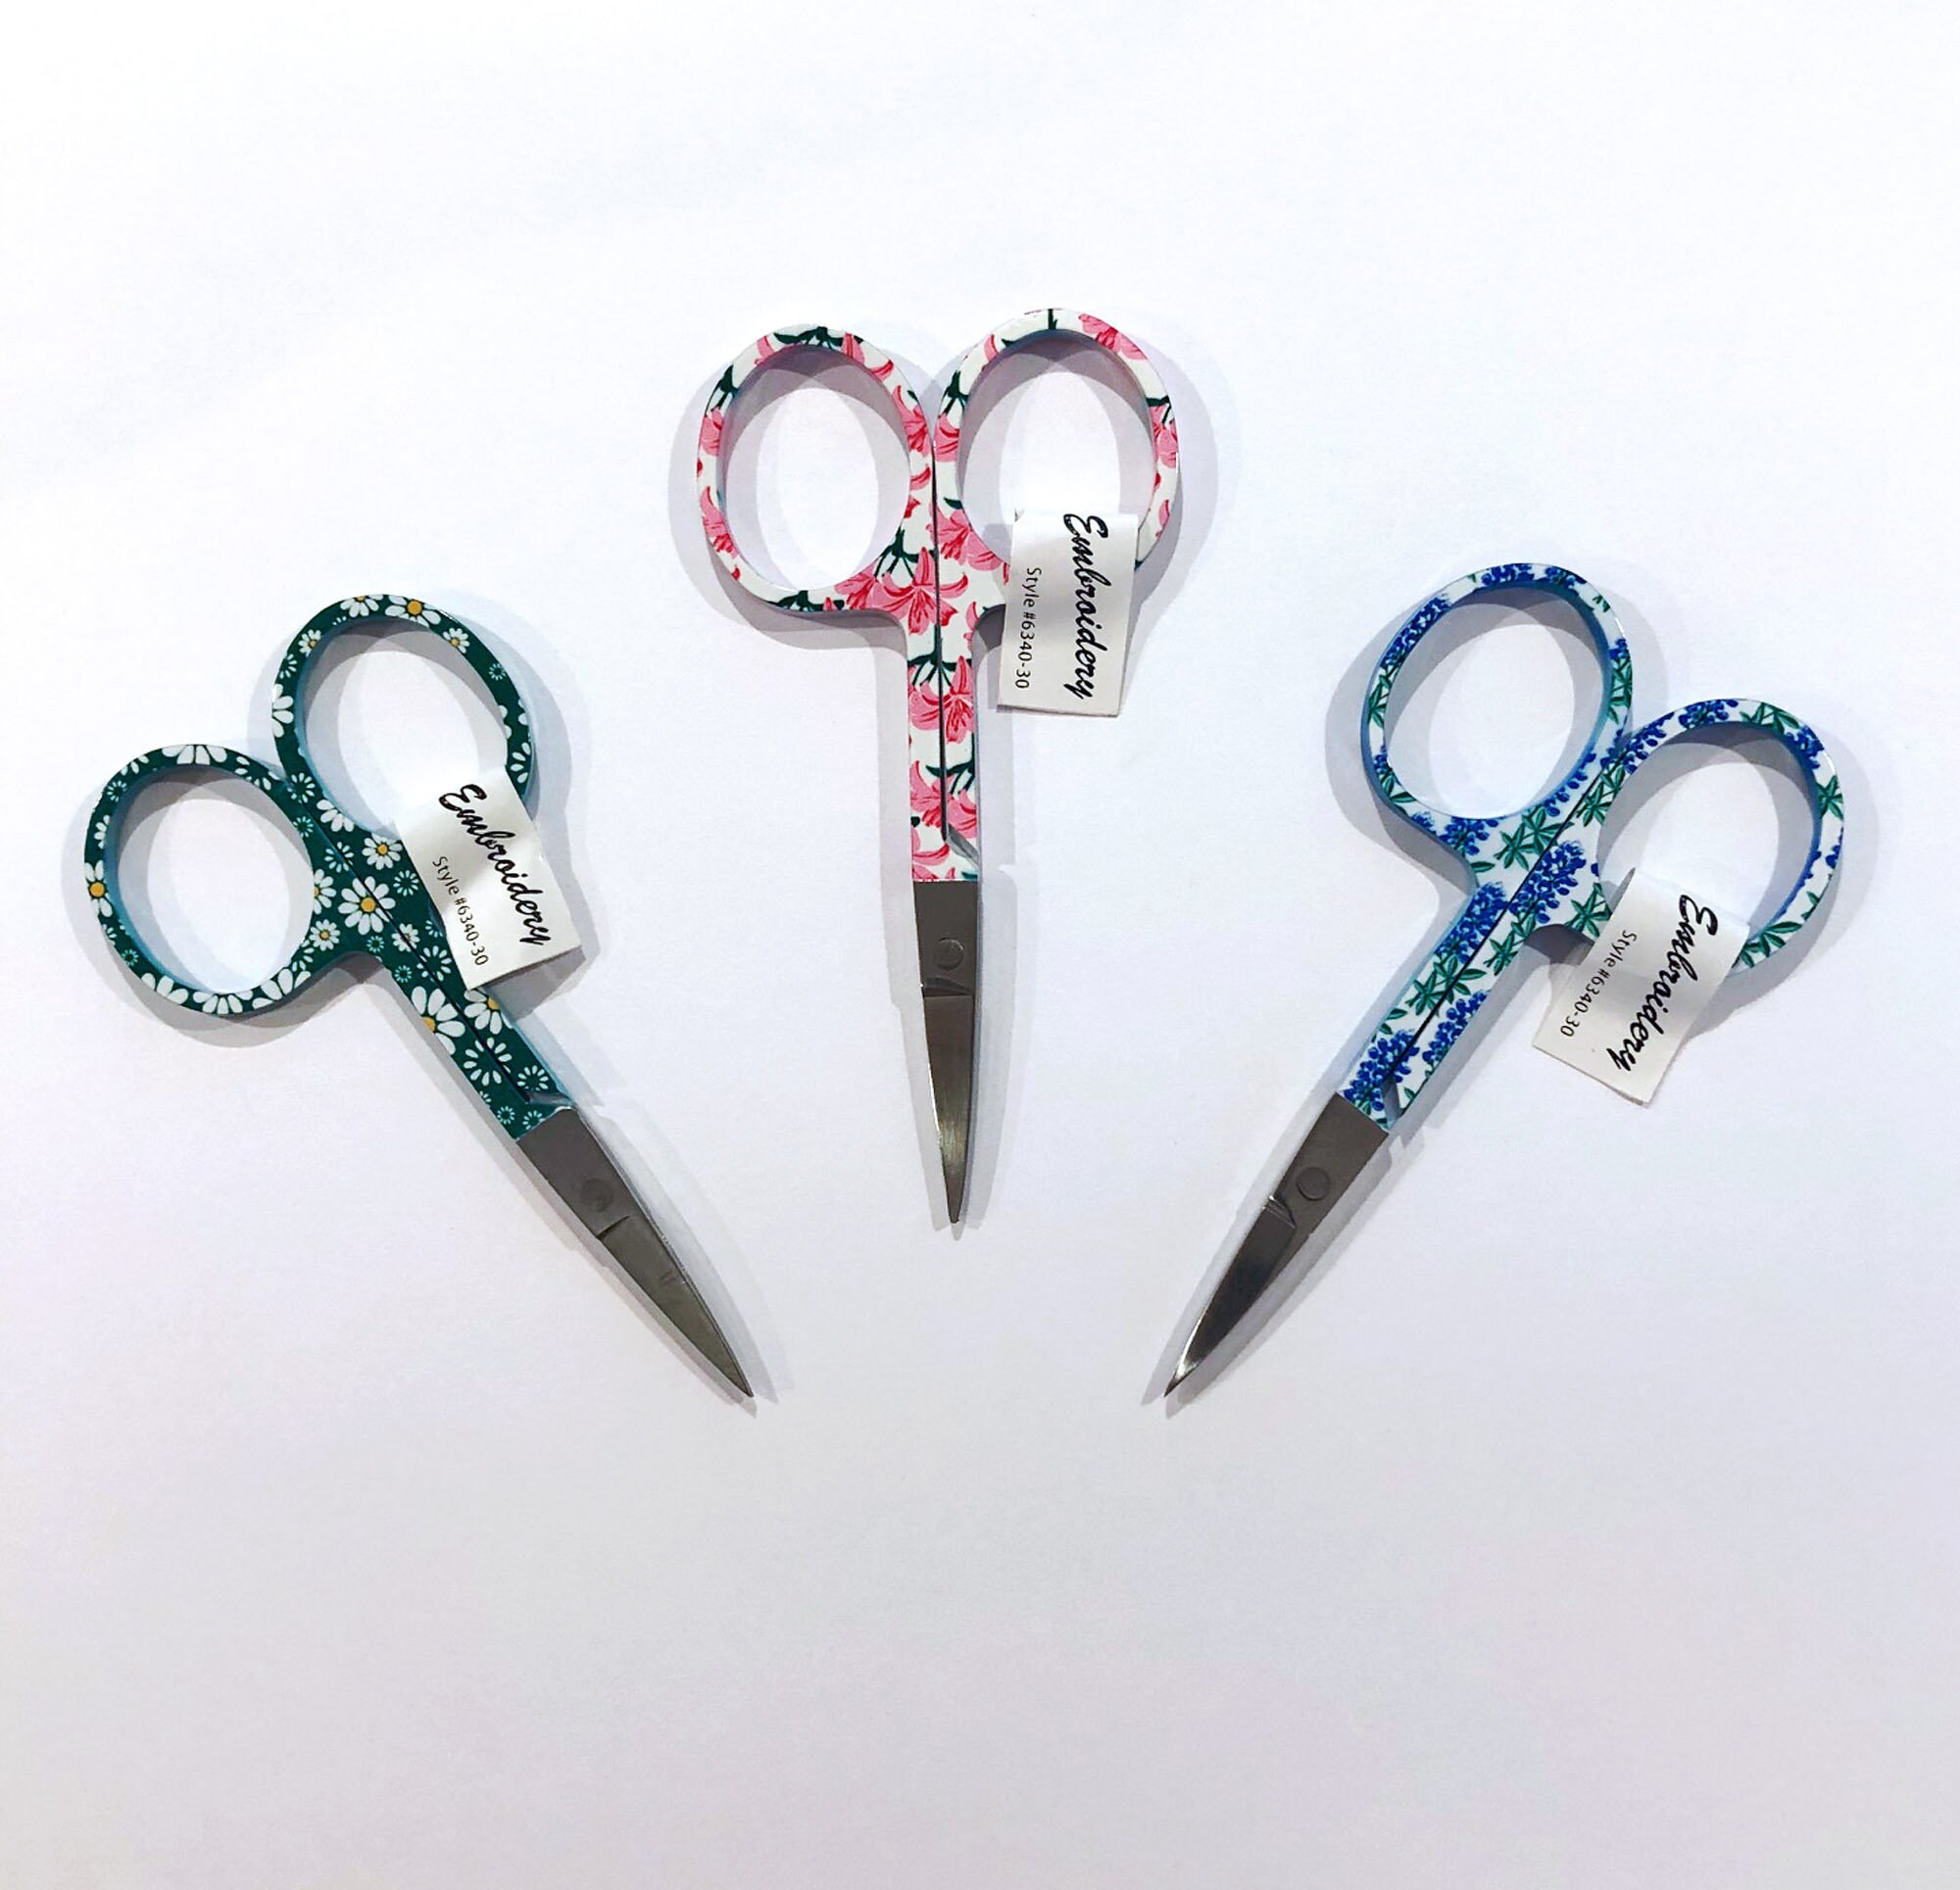 4.25 Lady Liberty Embroidery Scissors, Tres Chic Stitchery #S105